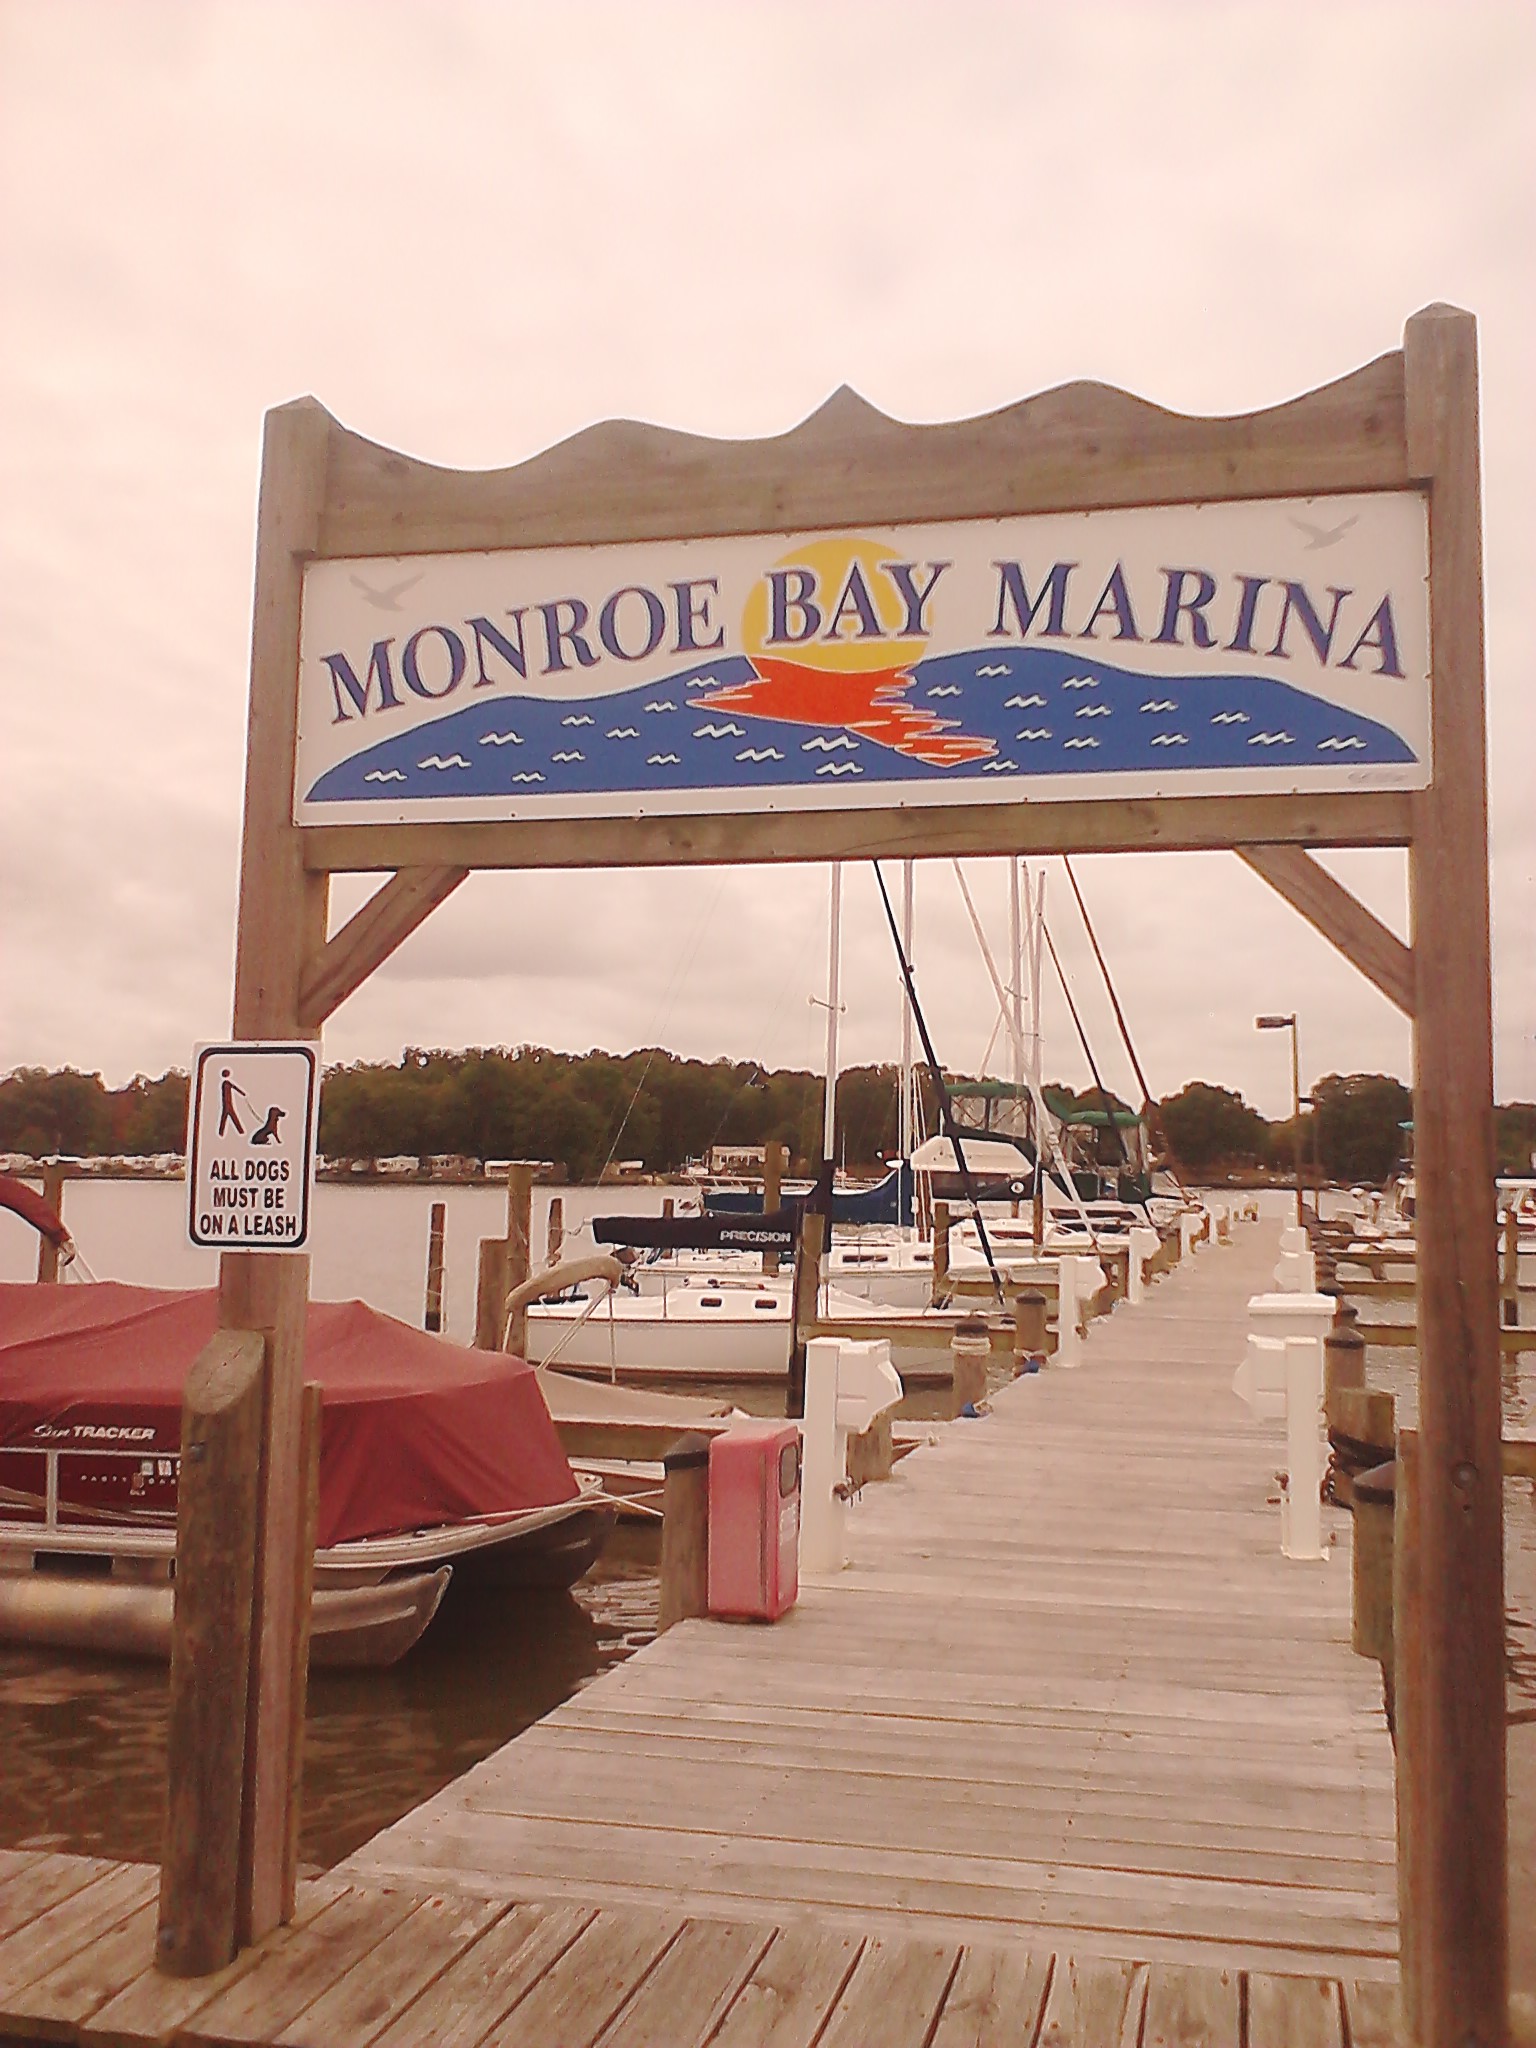 Monroe Bay Marina